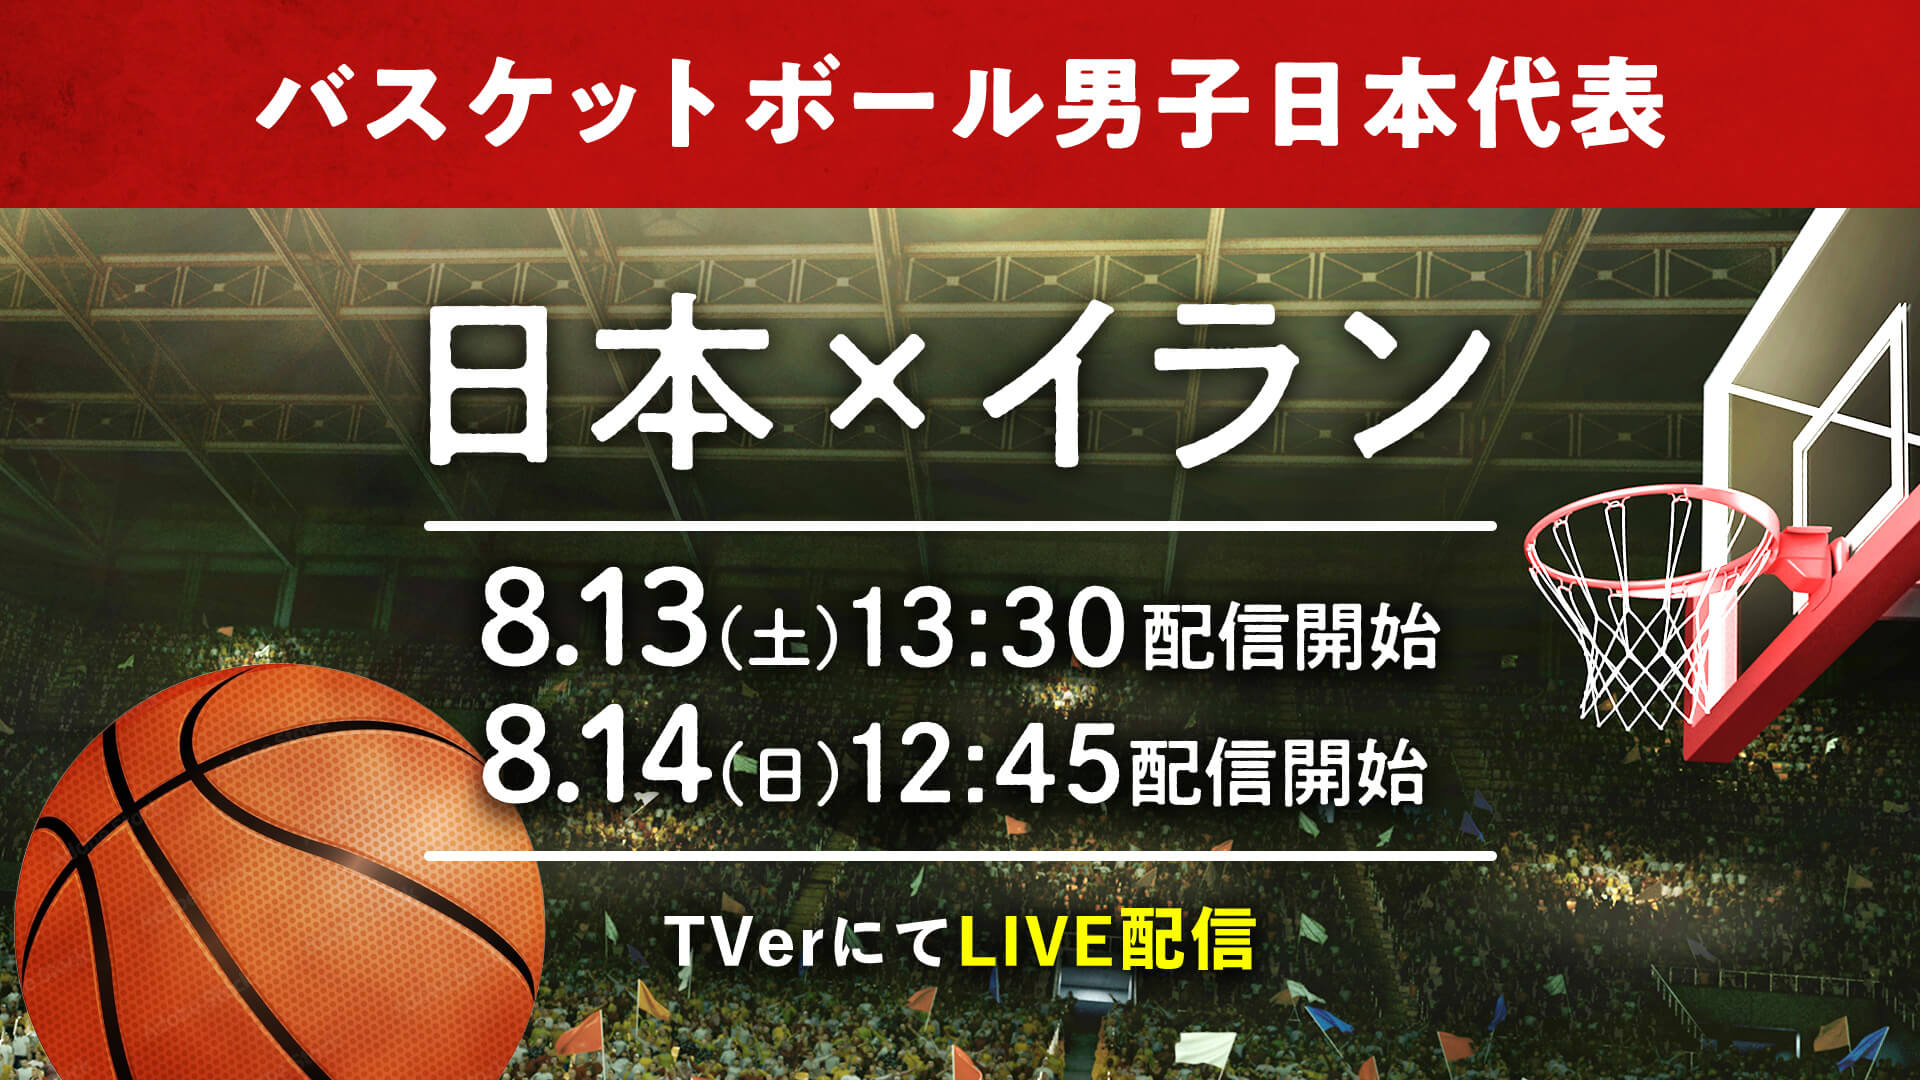 Tver この夏 日本のバスケが熱い バスケ男子日本代表戦を2日連続で無料ライブ配信 株式会社tverのプレスリリース